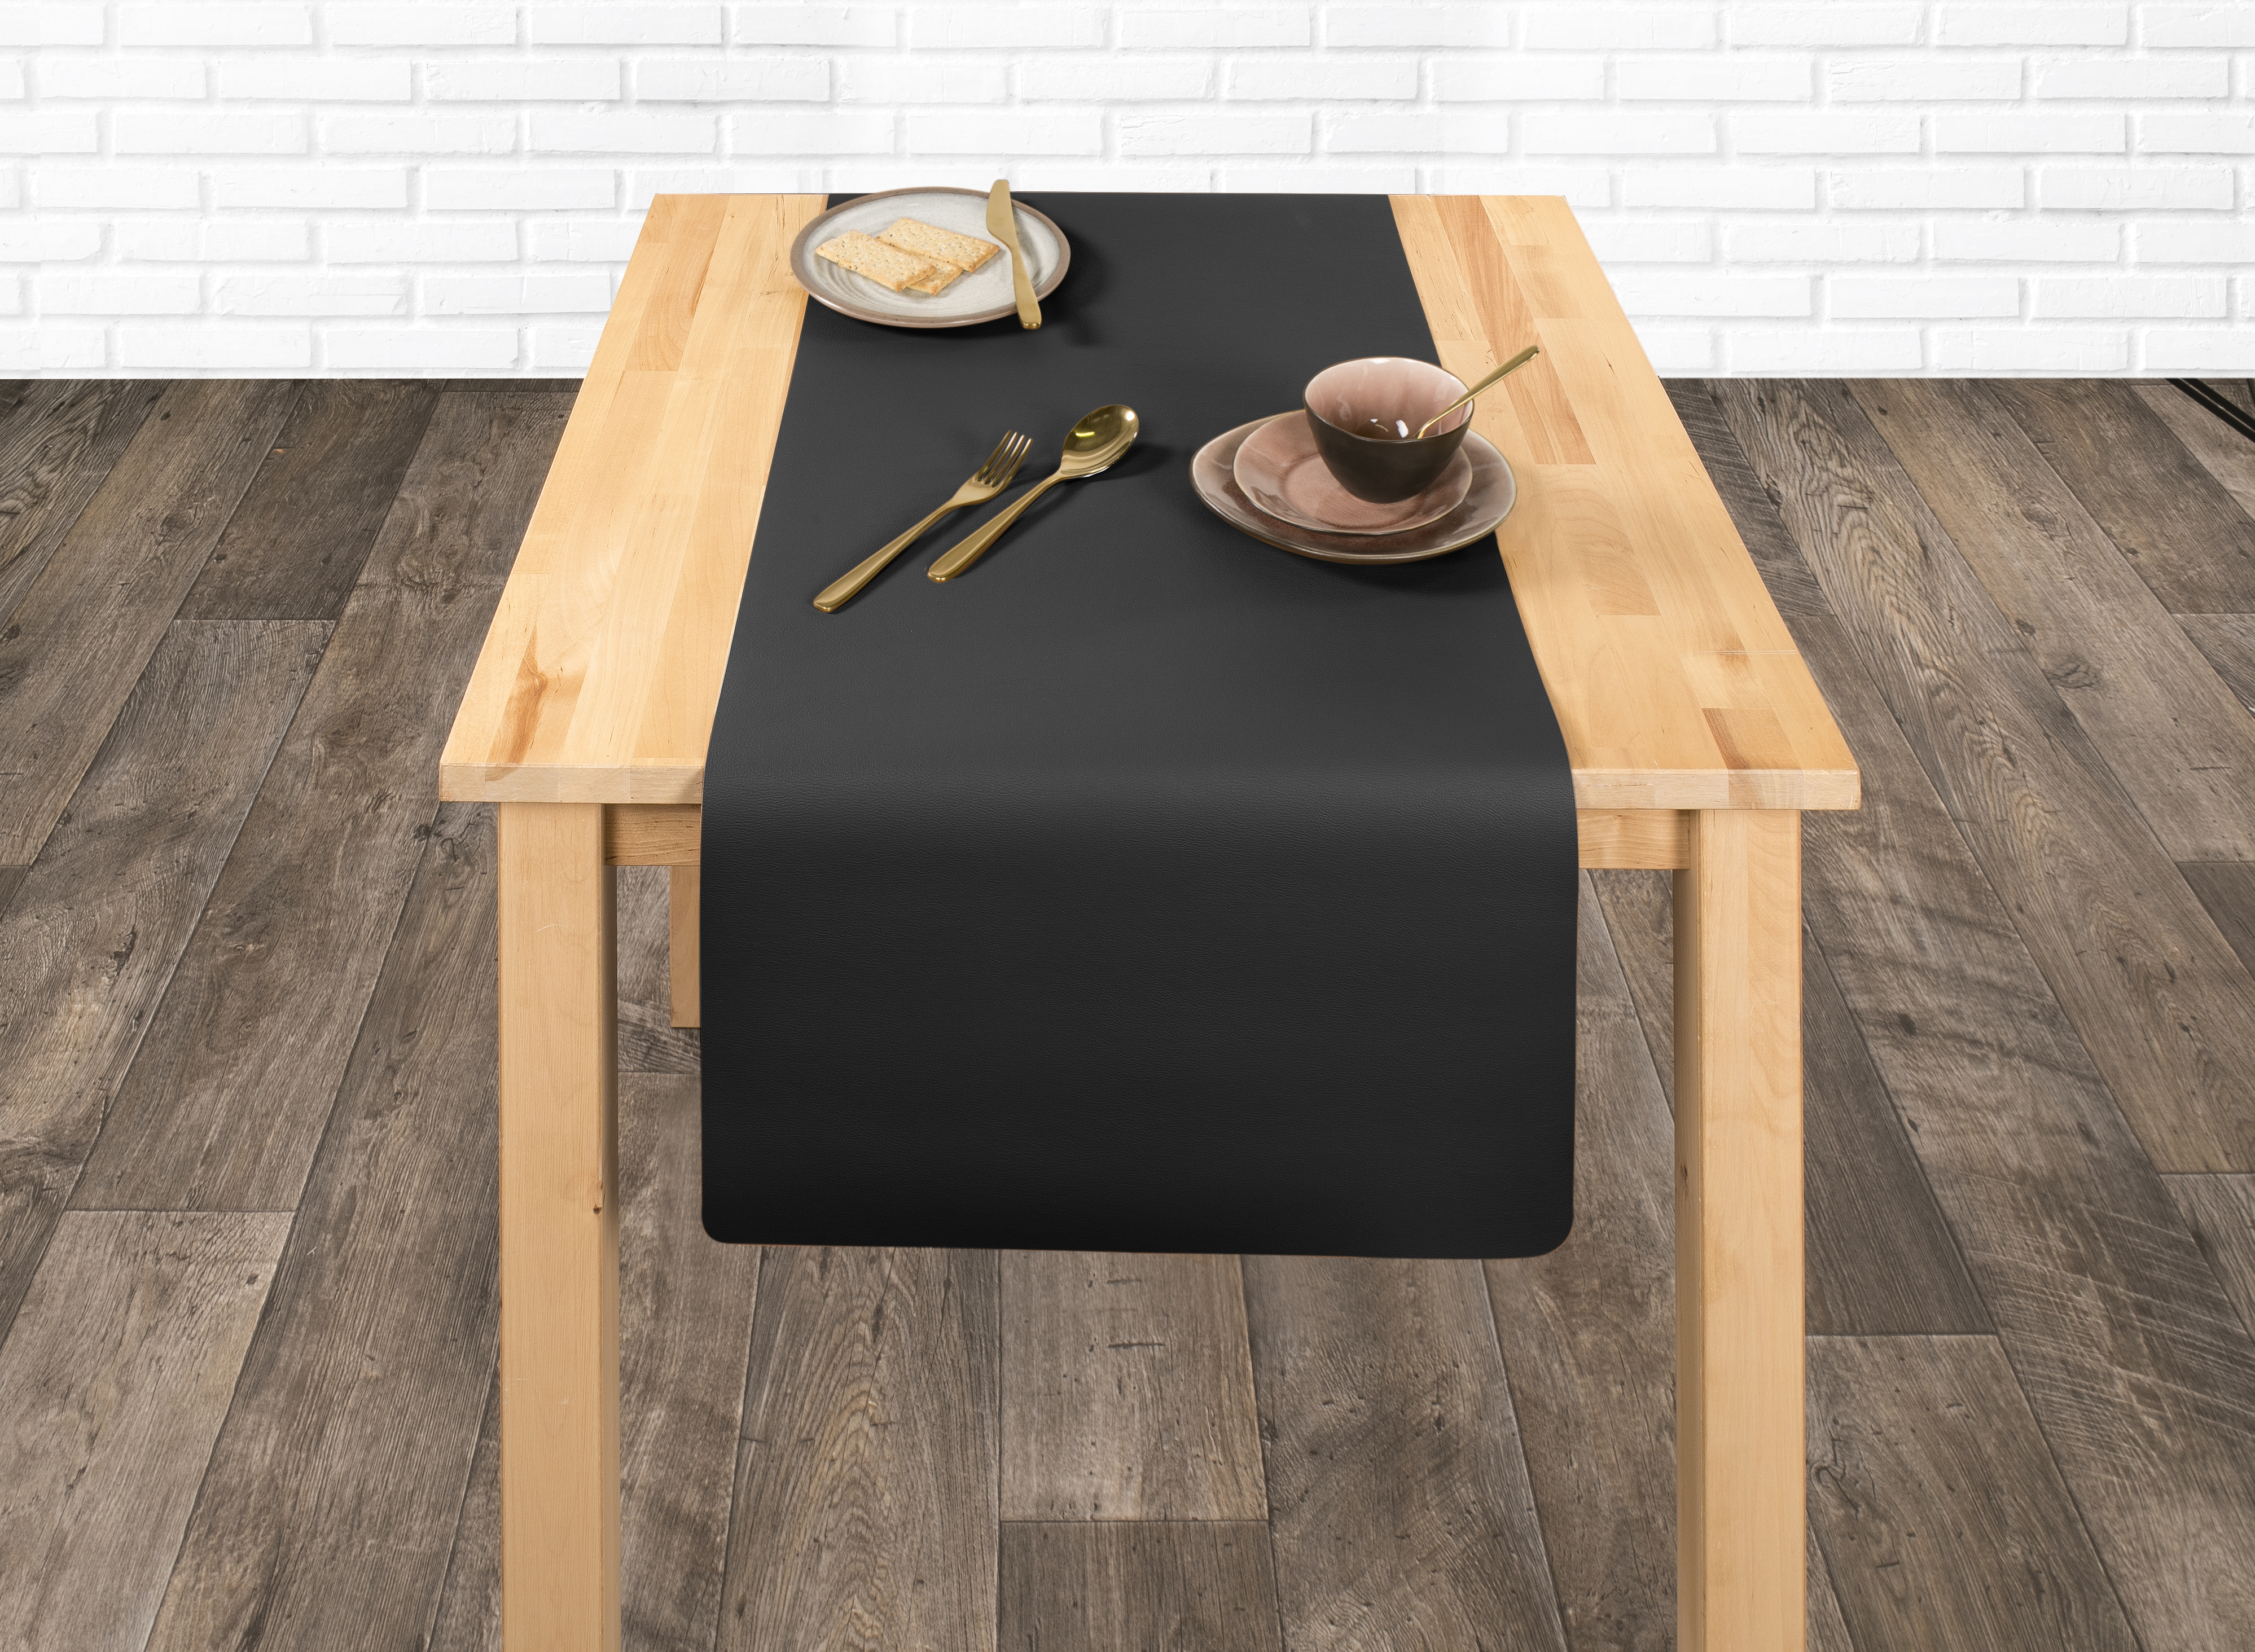 Chemin de table - Leather look imitation - 45X145cm, grey